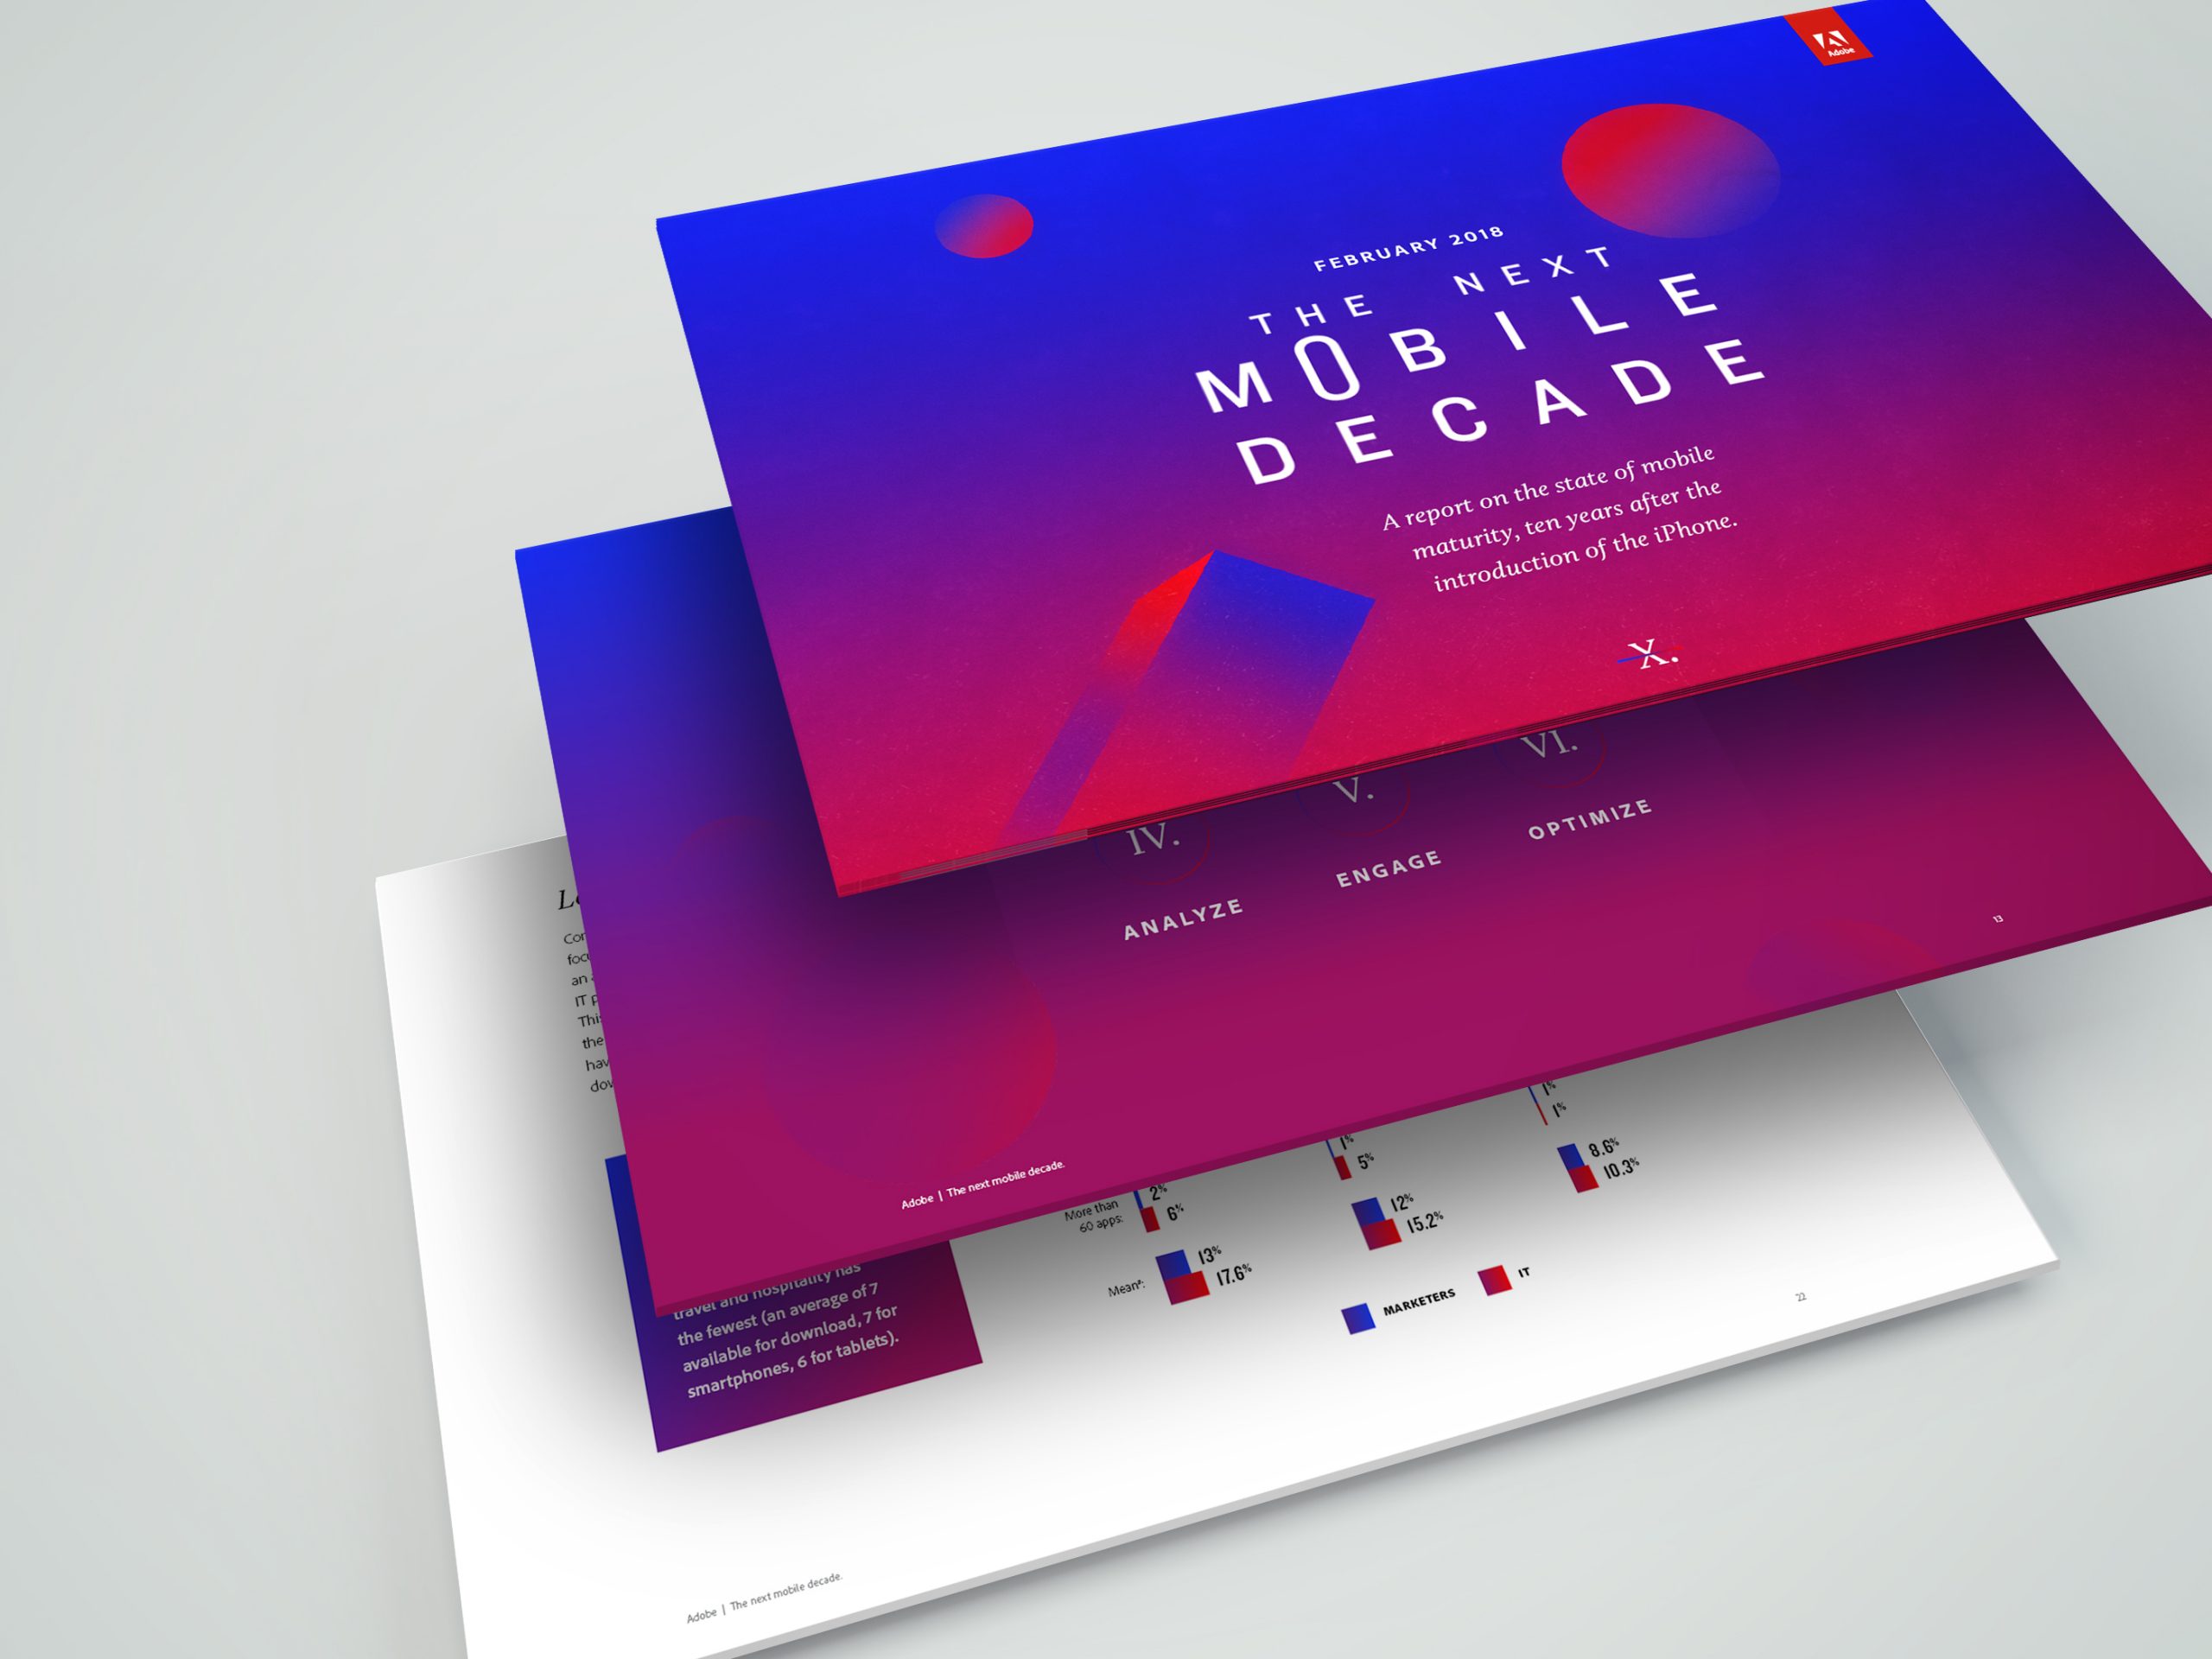 Adobe Mobile Maturity Report